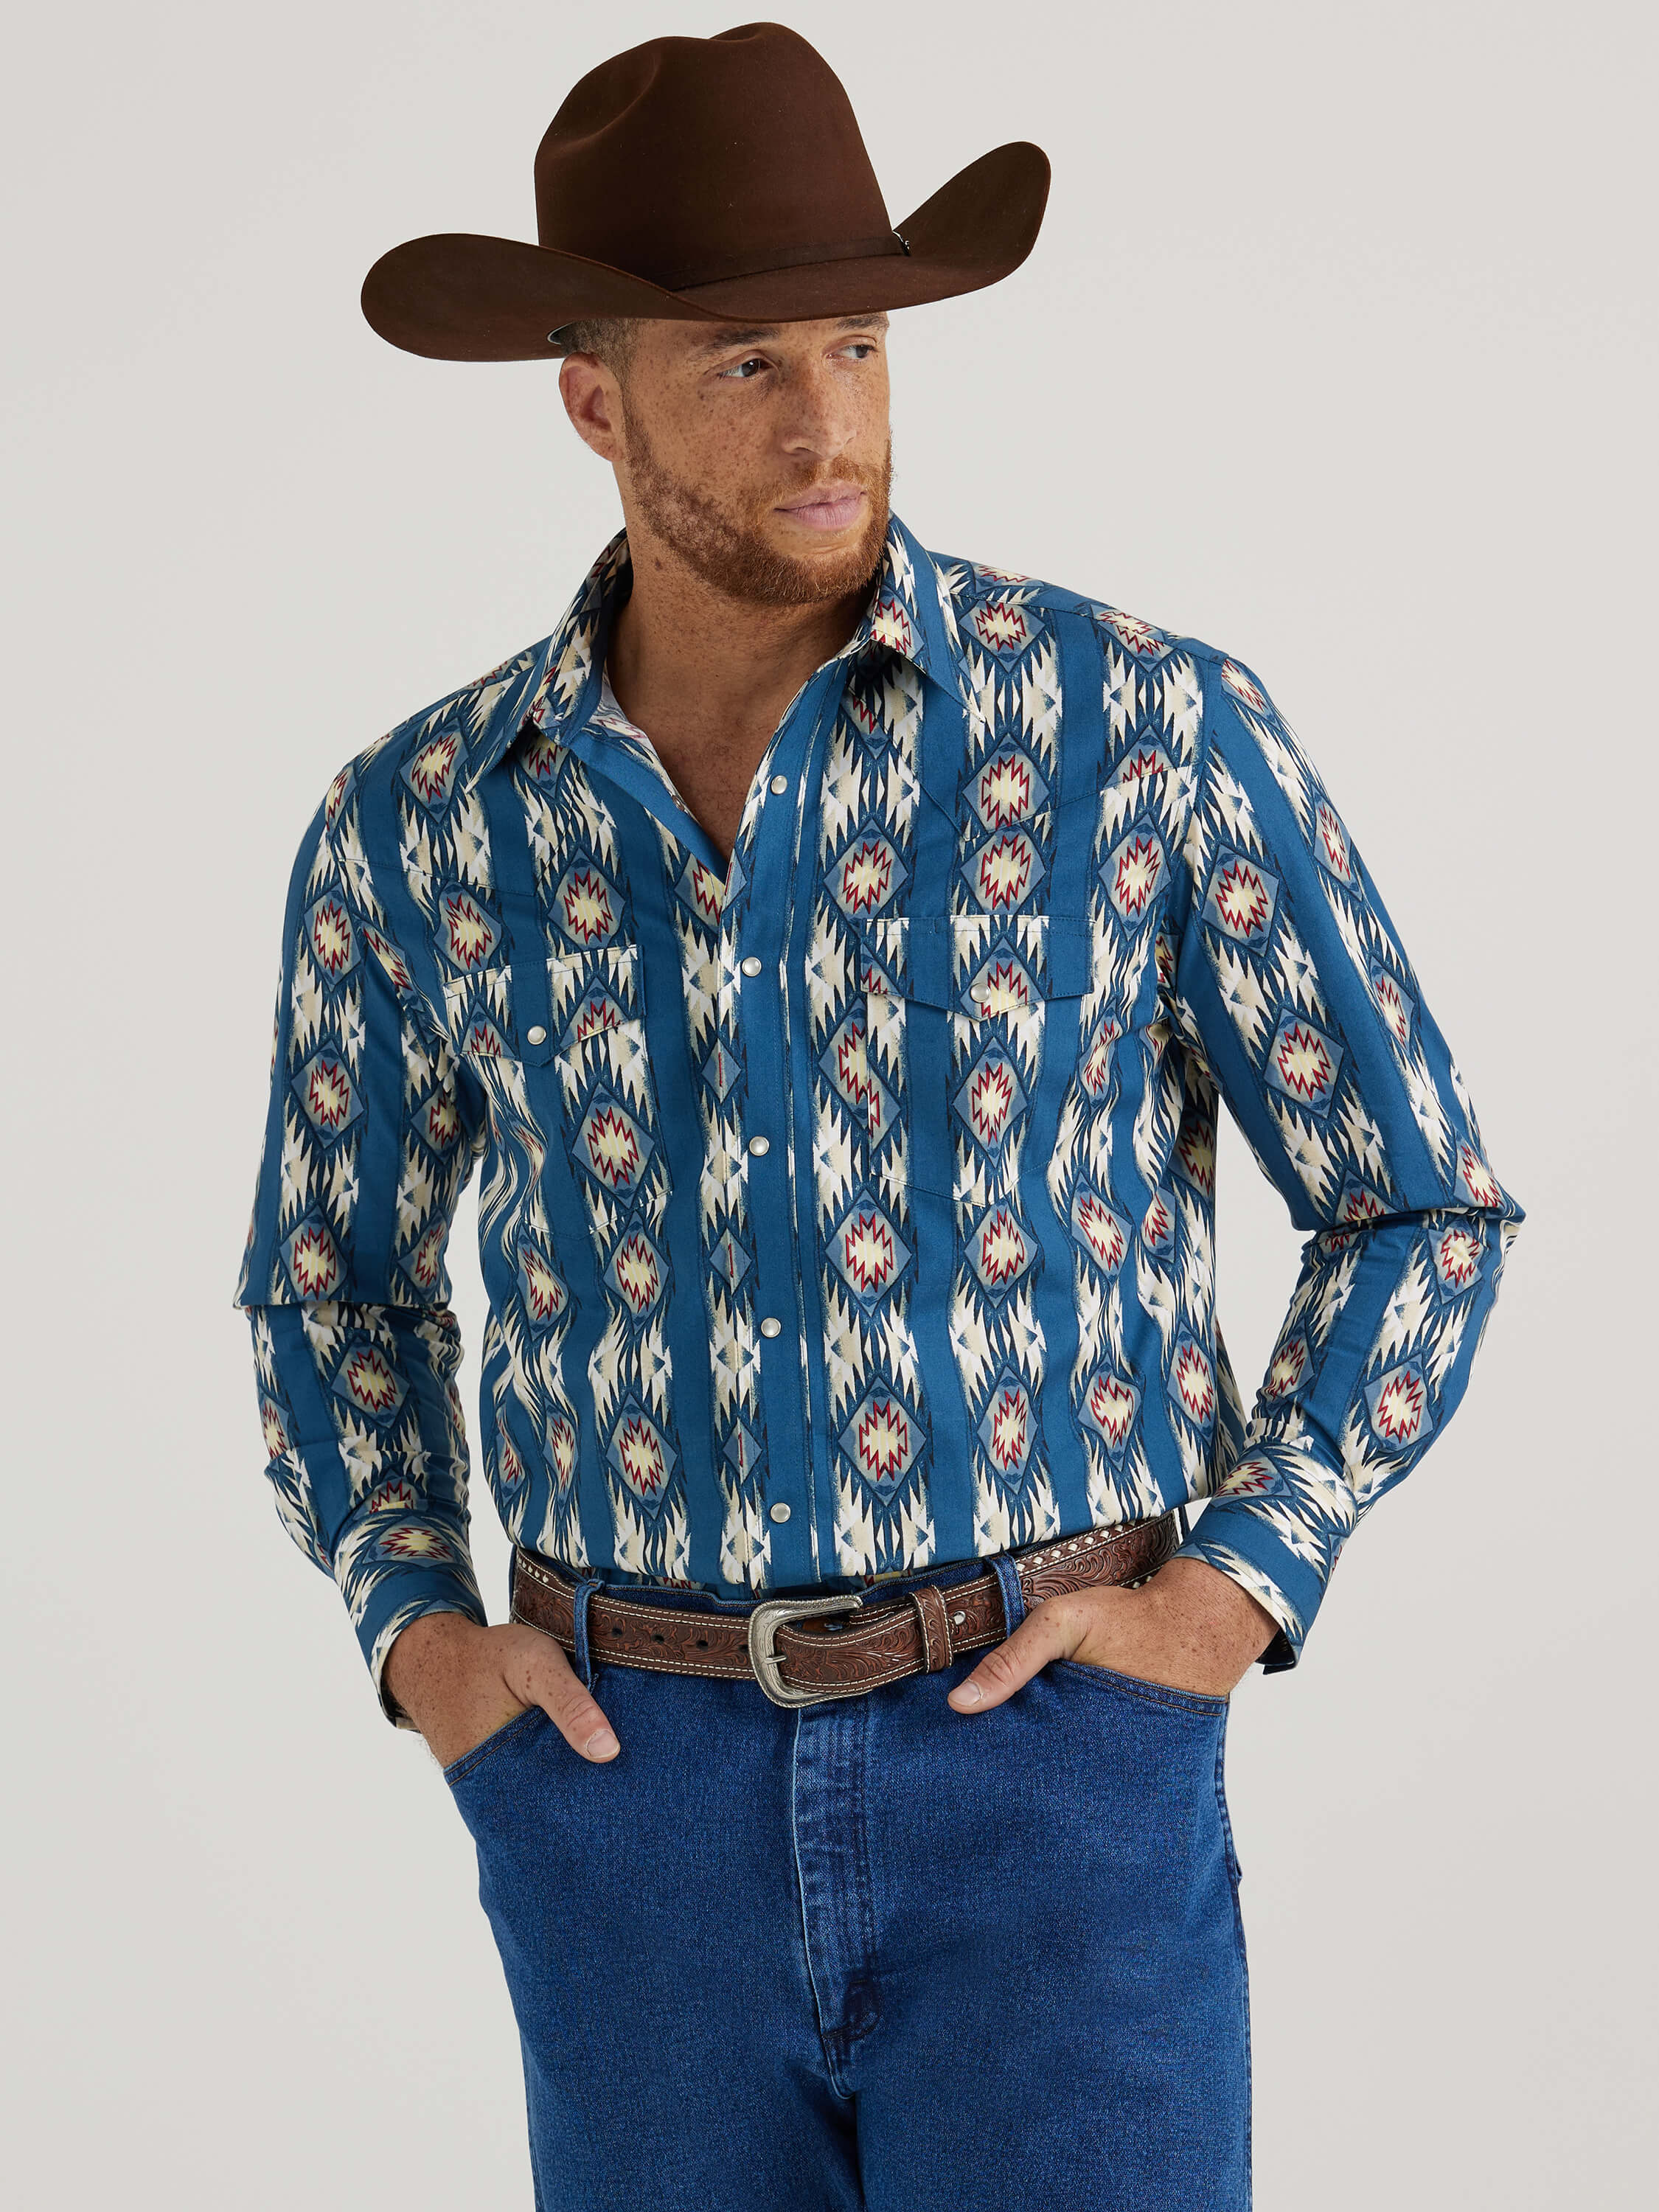 https://jimmyswesternwear.com/media/catalog/product/rdi/rdi/mens-wrangler-deep-turquoise-checotah-pearl-snap-long-sleeve-shirt-12344419_1.jpg?width=1250&height=1000&store=default&image-type=image